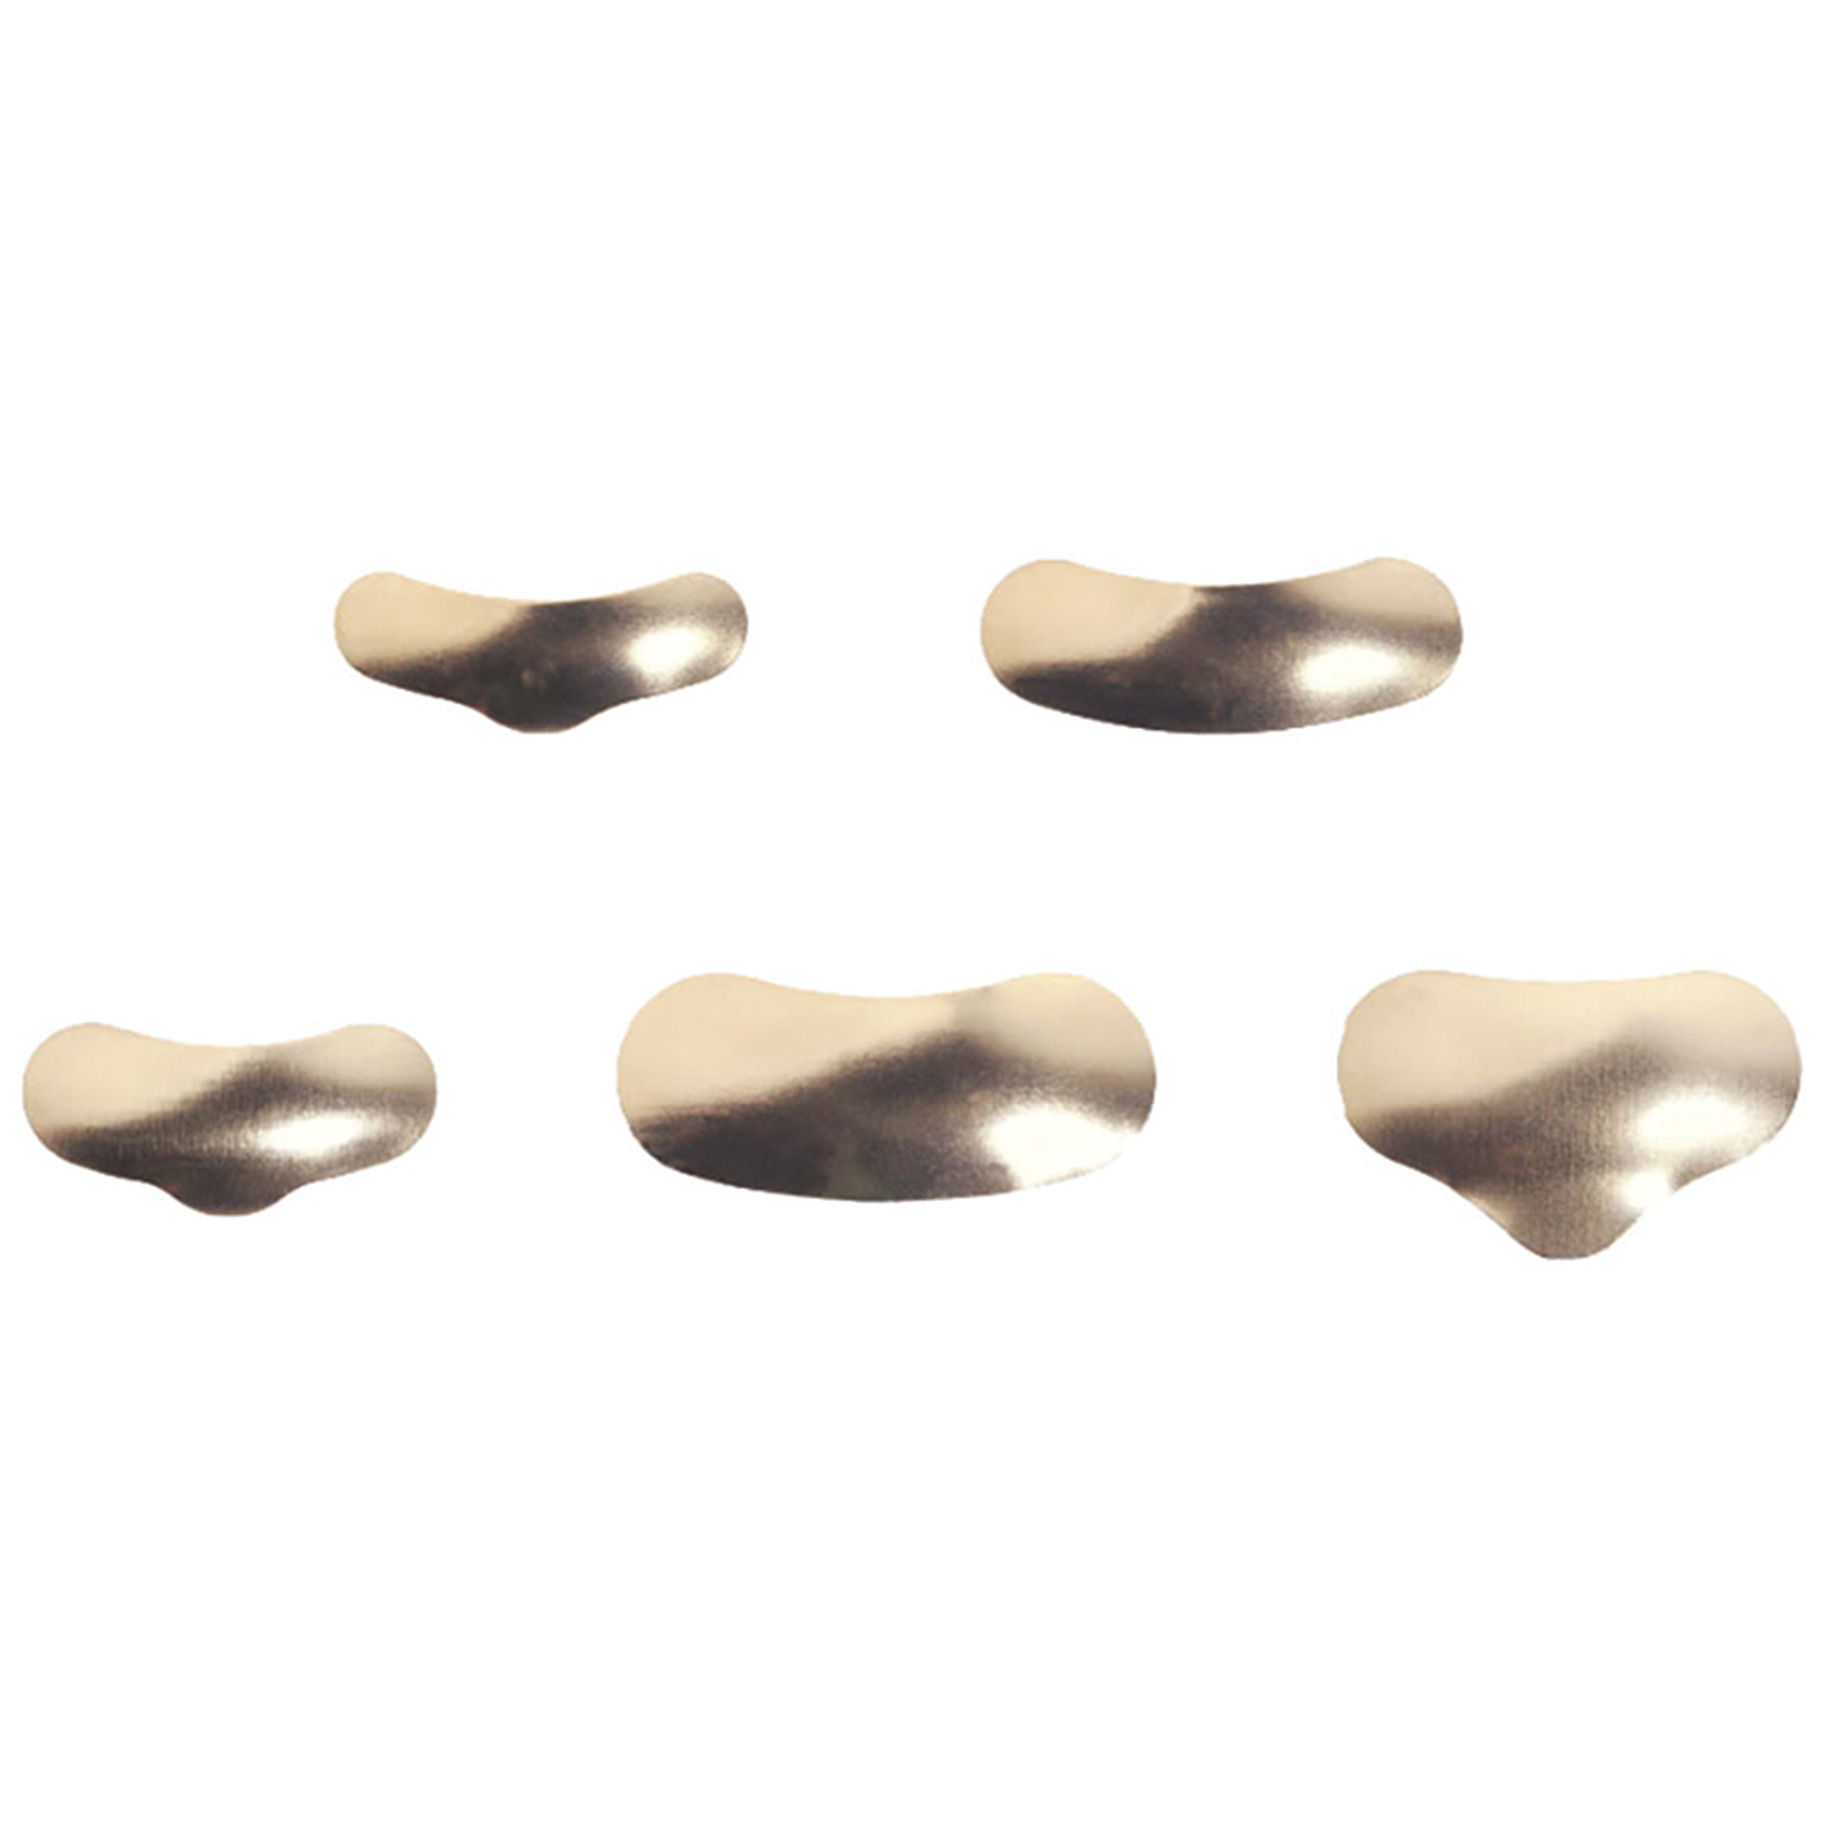 Composi-Tight Gold Standard Size Matrix Bands (AU200) 